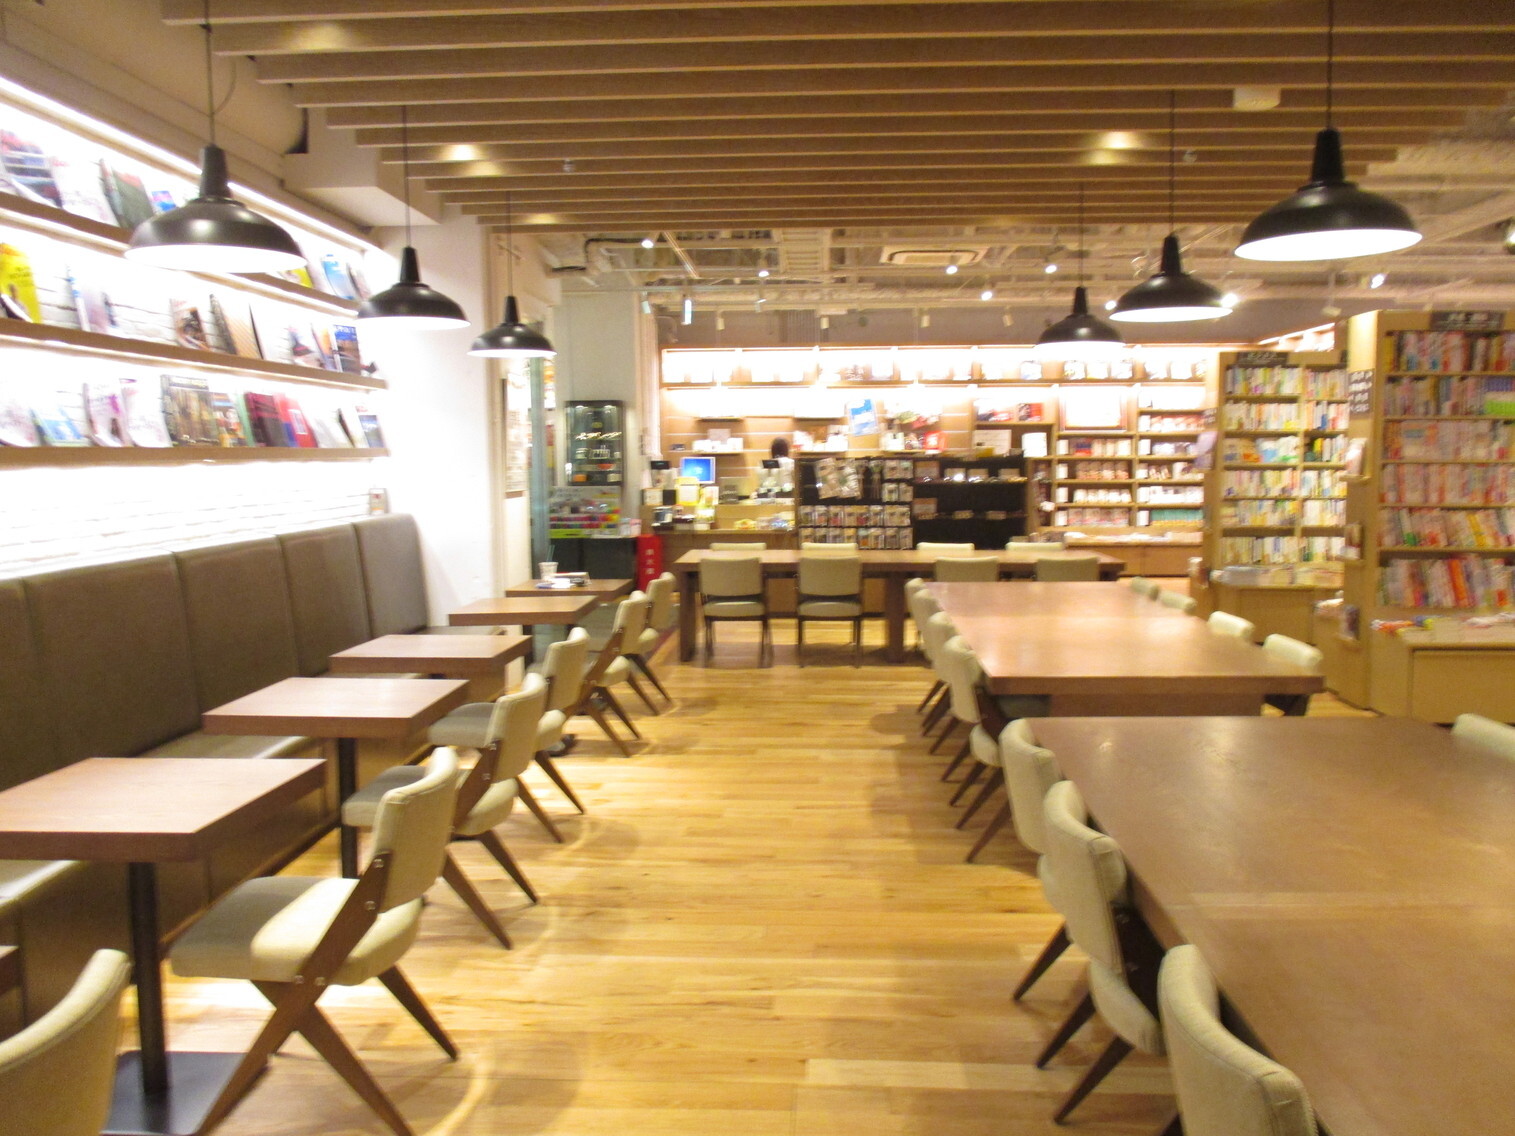 TSUTAYA서점의 책과 잡지들을 무료로 읽을 수 있는 스타벅스! 오사카여행의 피로를 힐링하는 